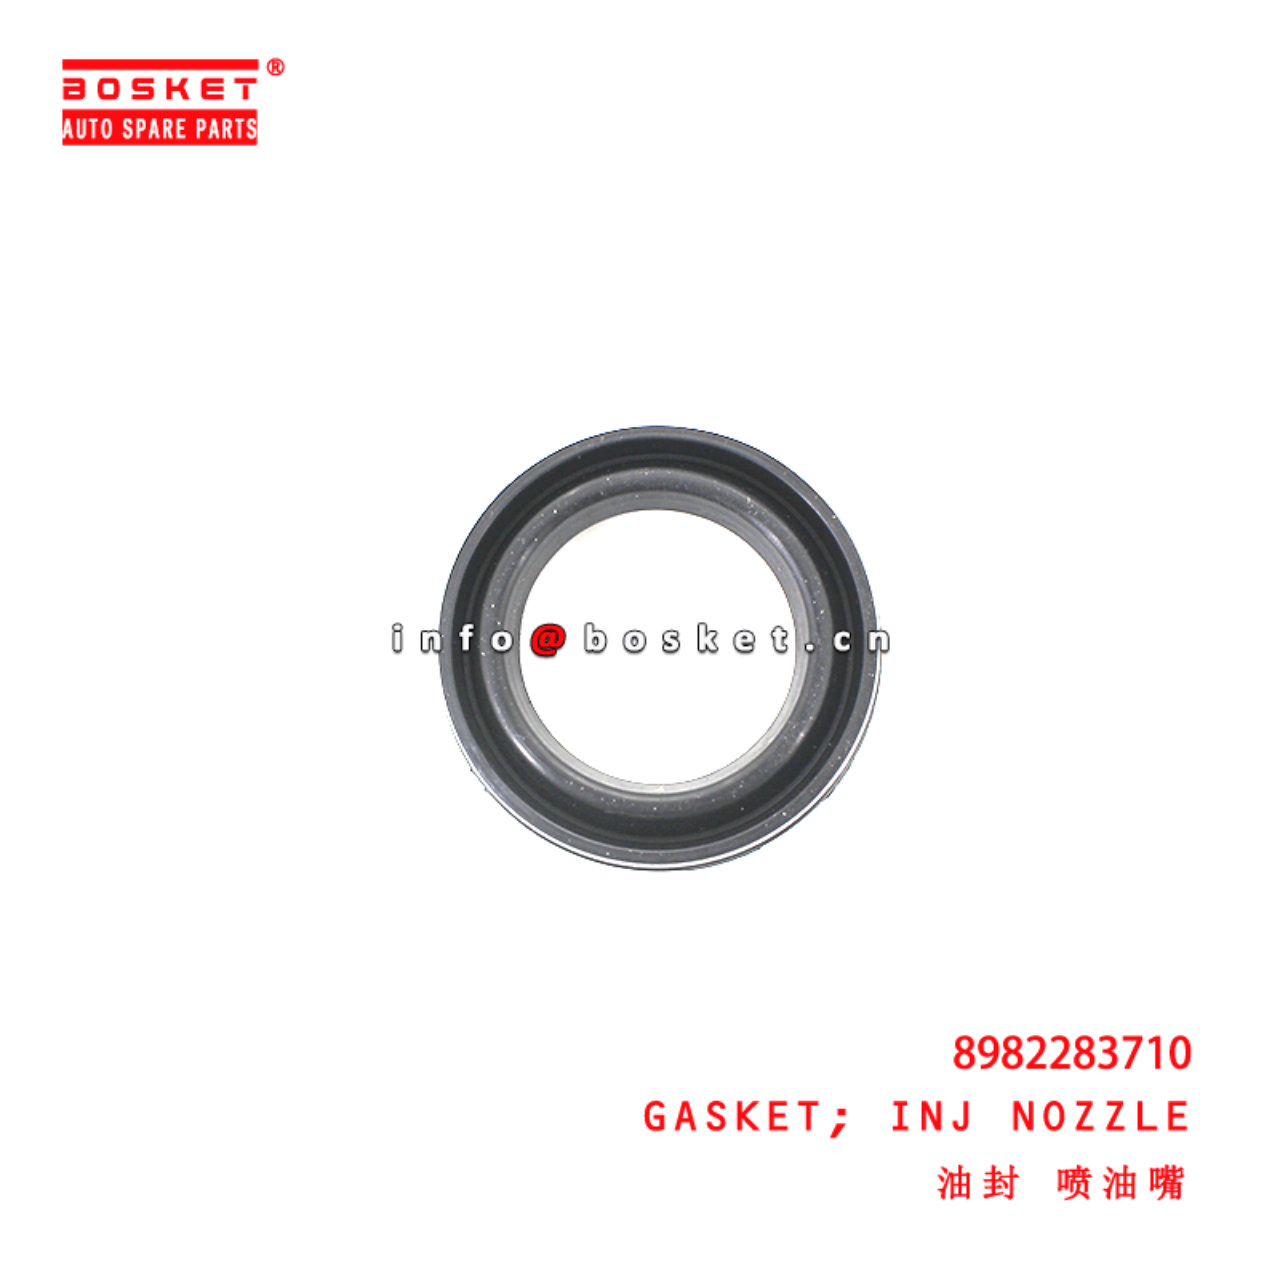 8-98228371-0 Injection Nozzle Gasket suitable for ISUZU D-MAX  8982283710